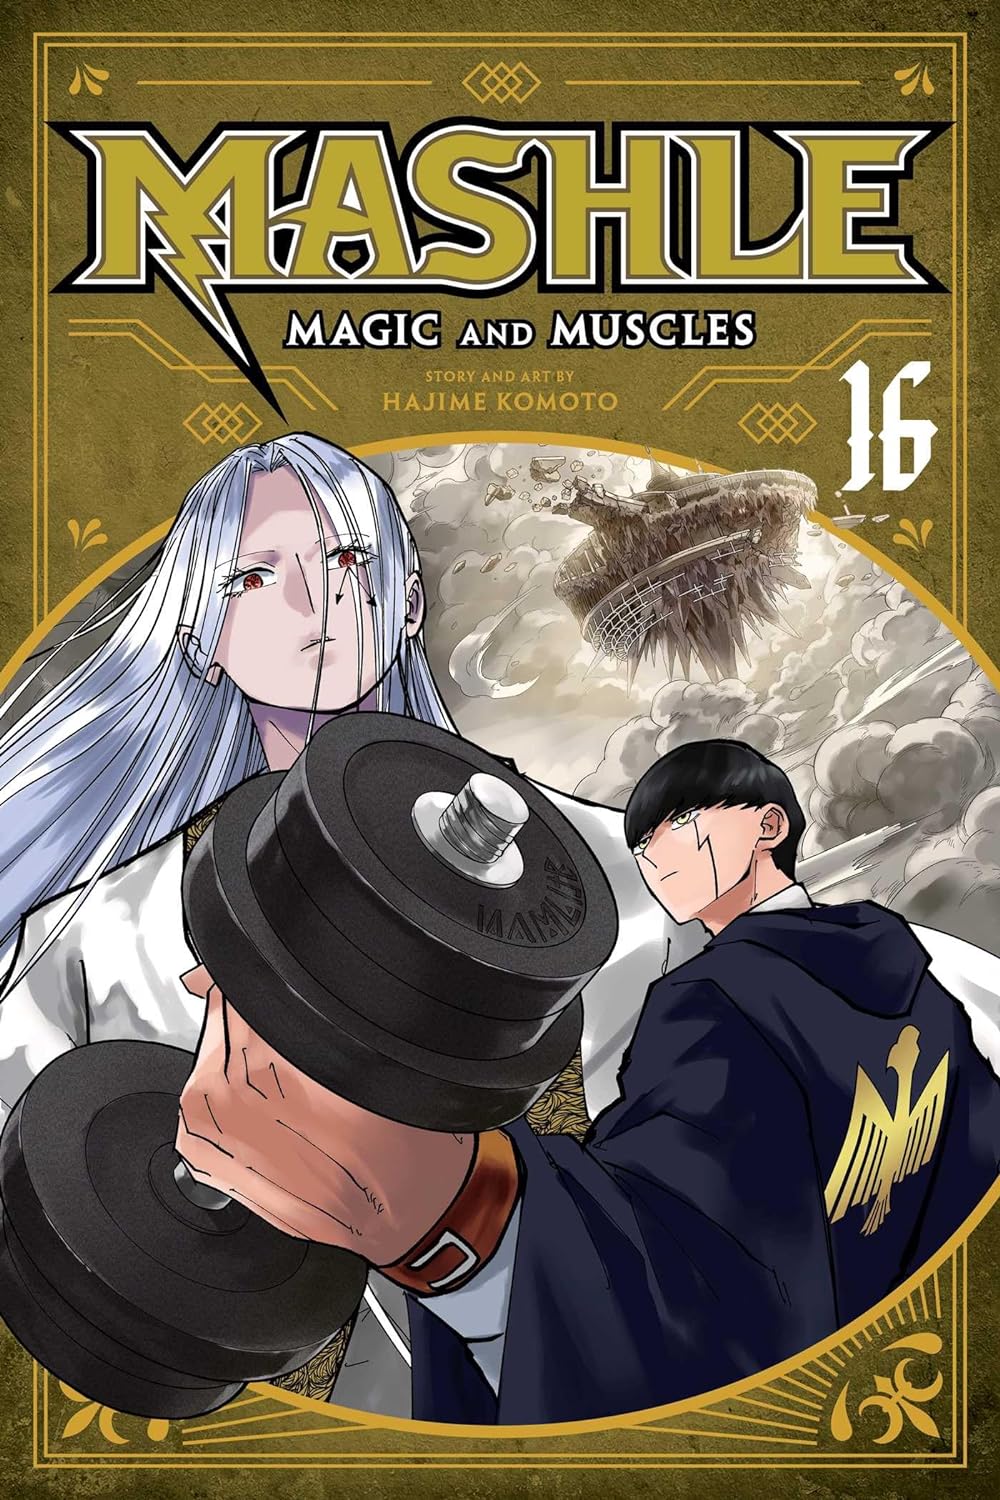 Mashle: Magic and Muscles Volume 16